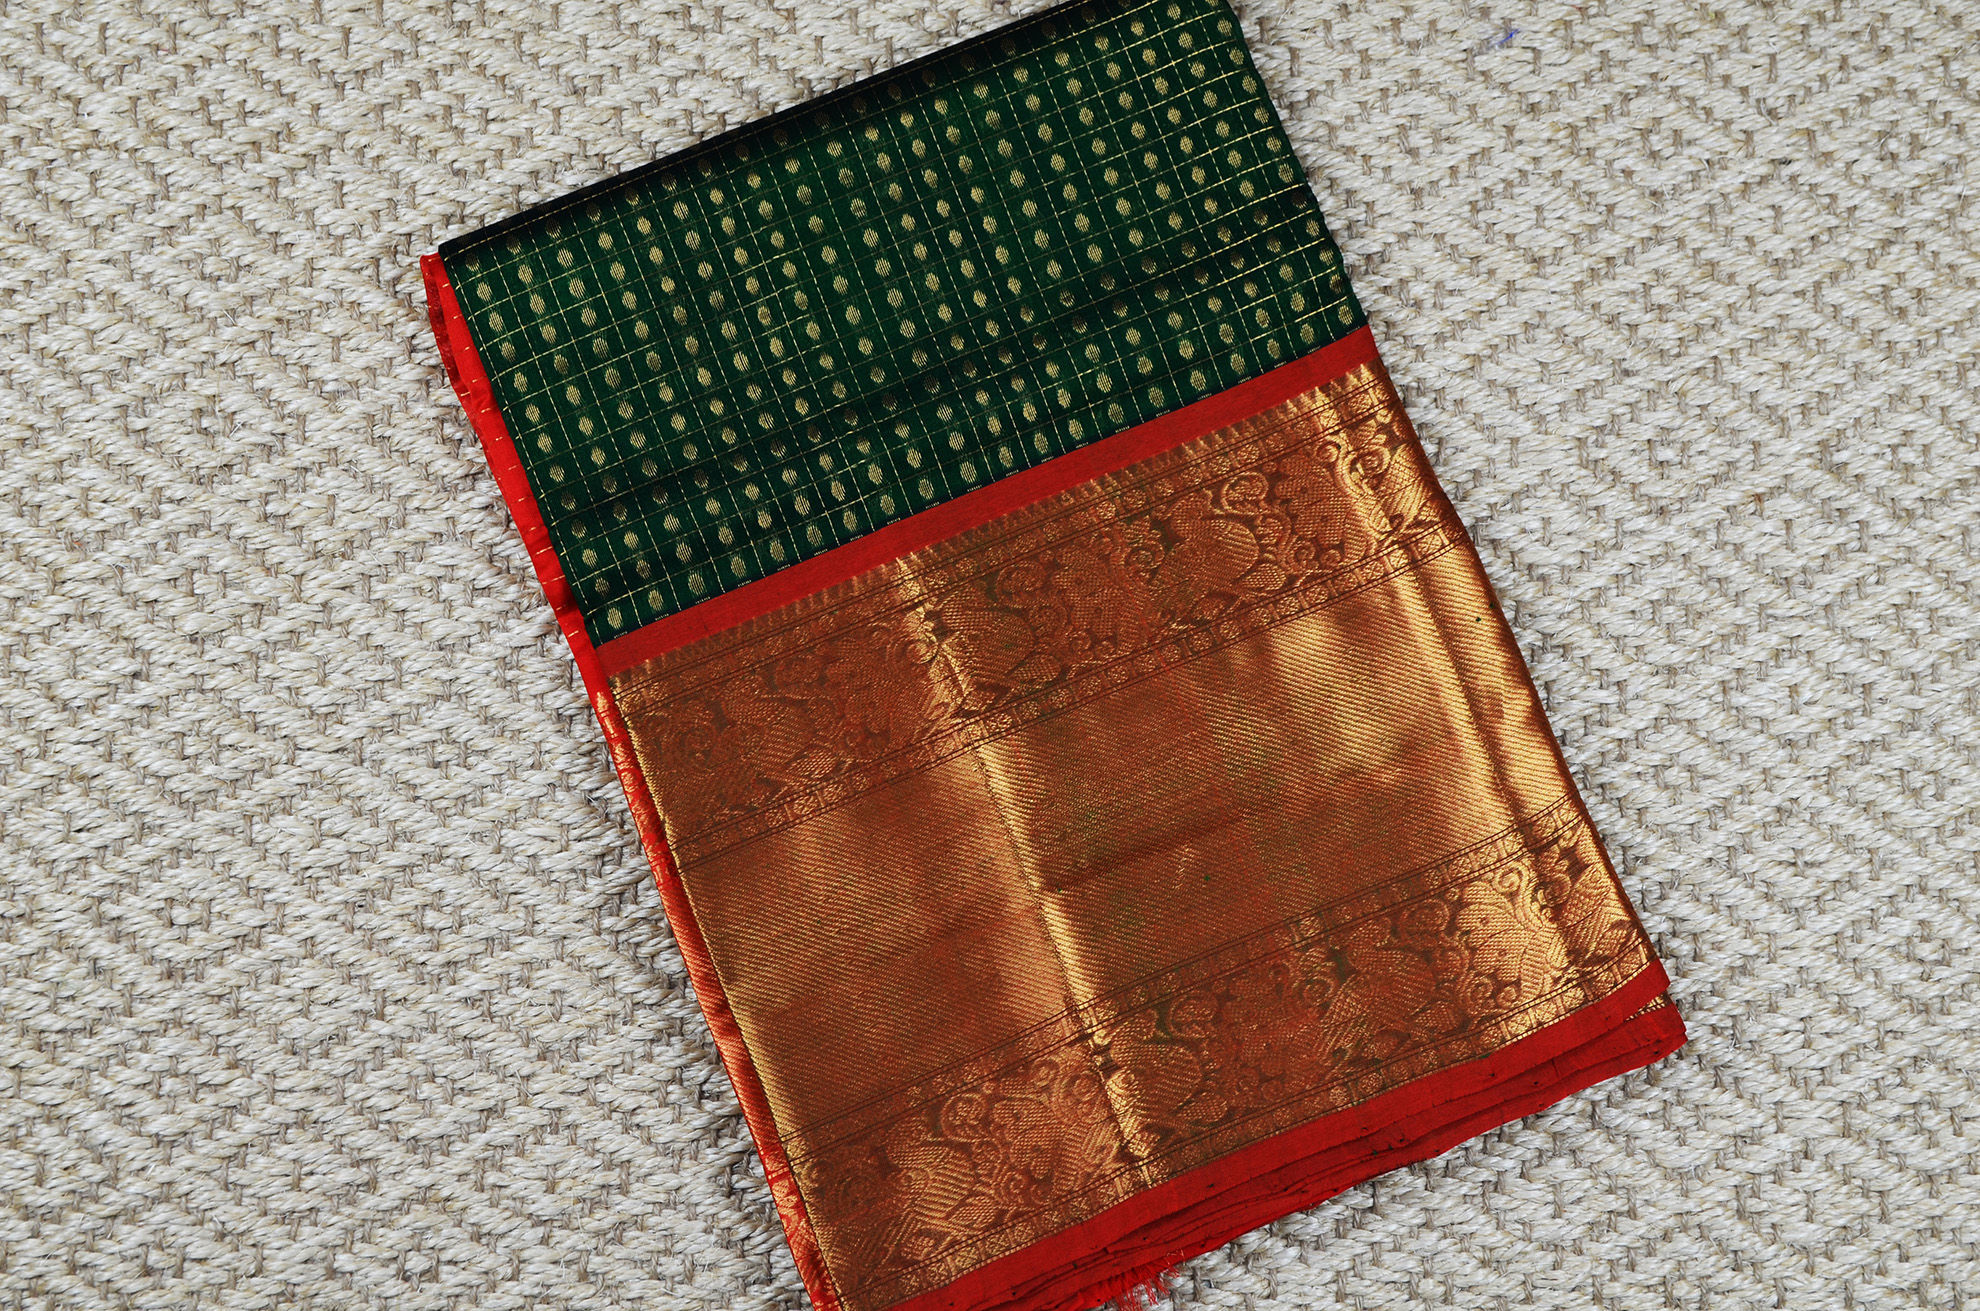 Kuppadam silk sarees|Latest Kuppadam silks sarees|pinkwinkgirl.com